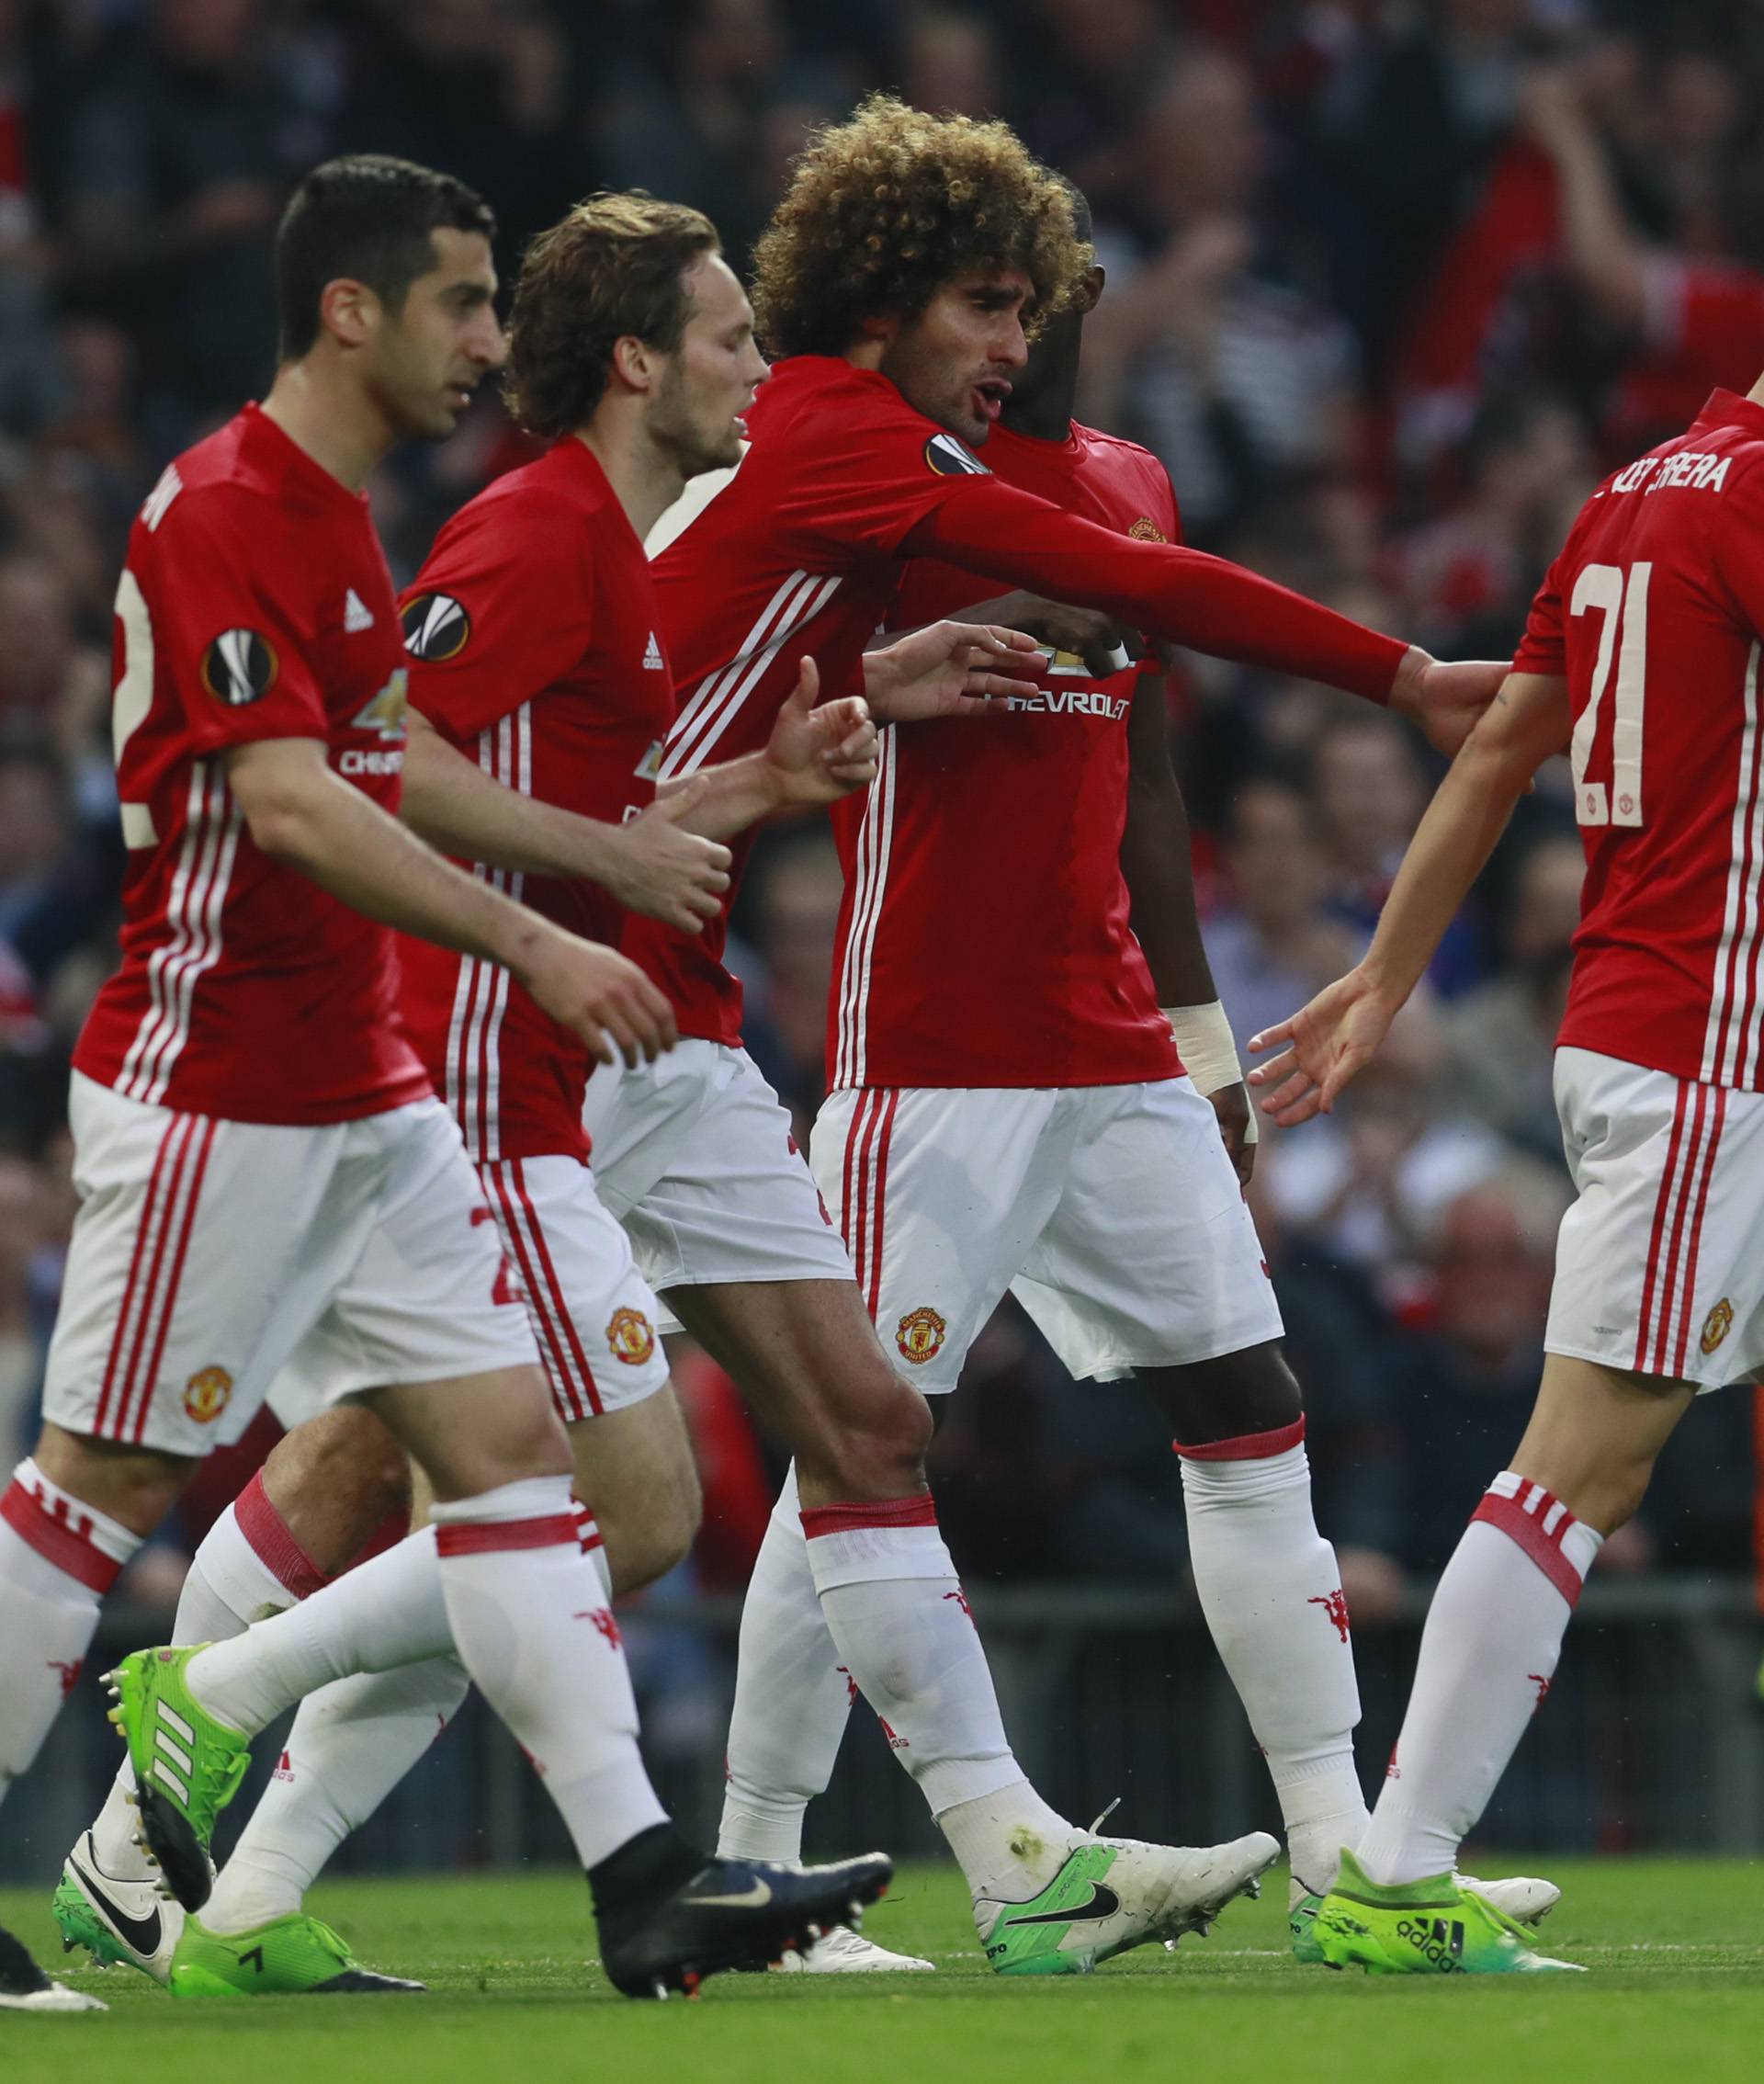 Manchester United's Marouane Fellaini celebrates scoring their first goal with teammates